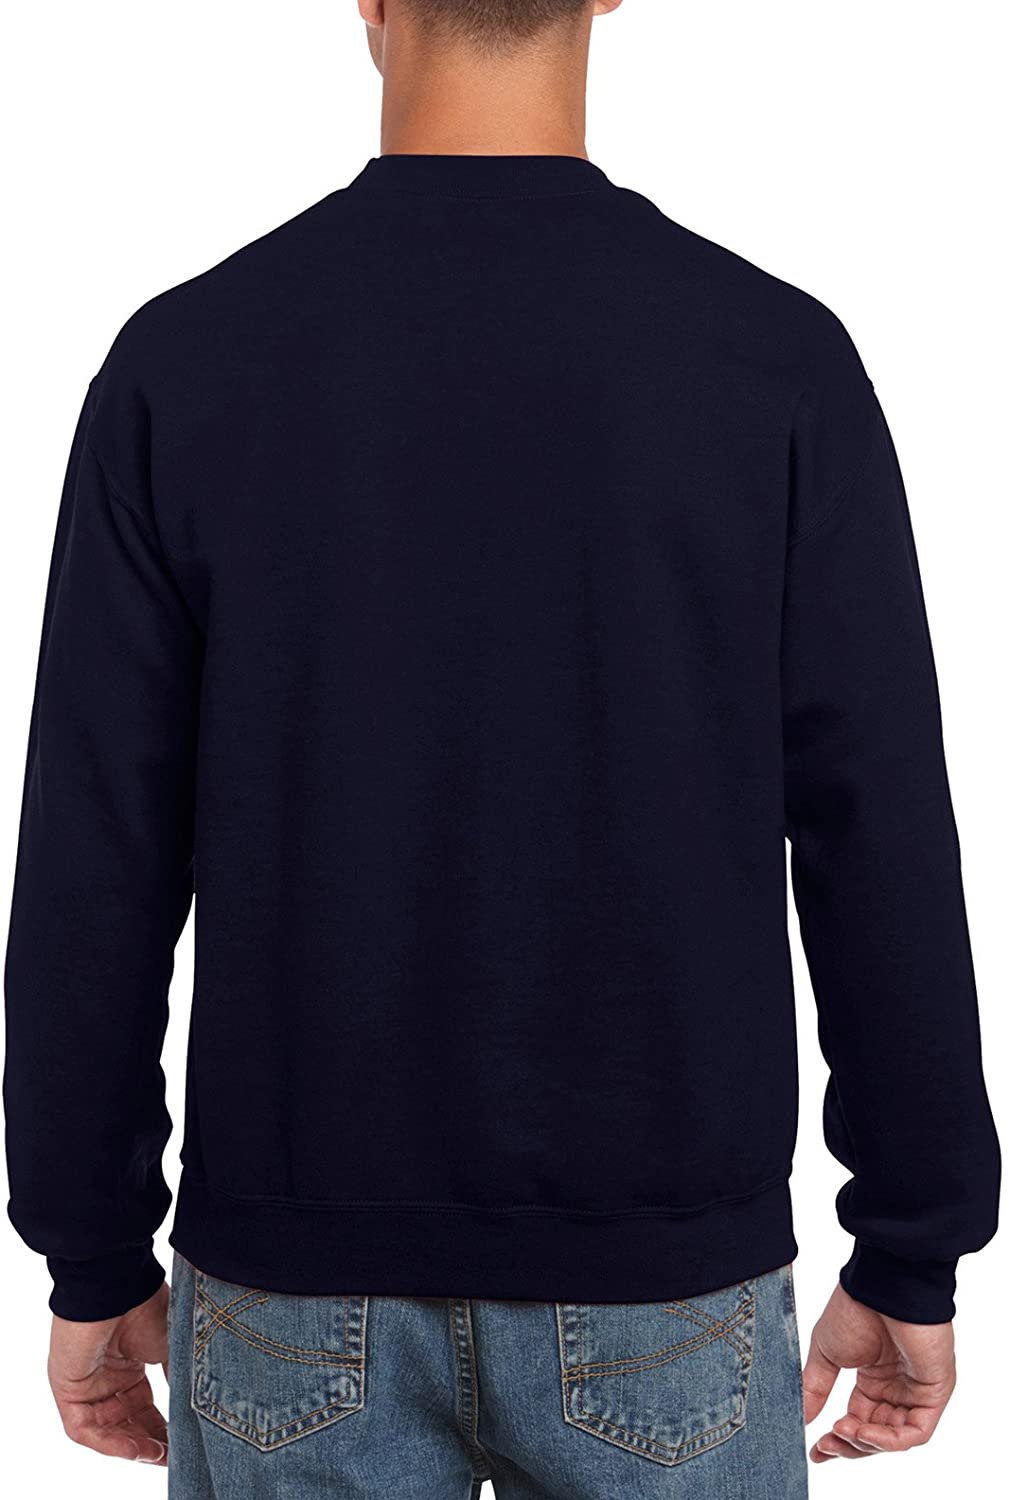 Gildan Men's Fleece Crewneck Sweatshirt, Style G18000 | eBay